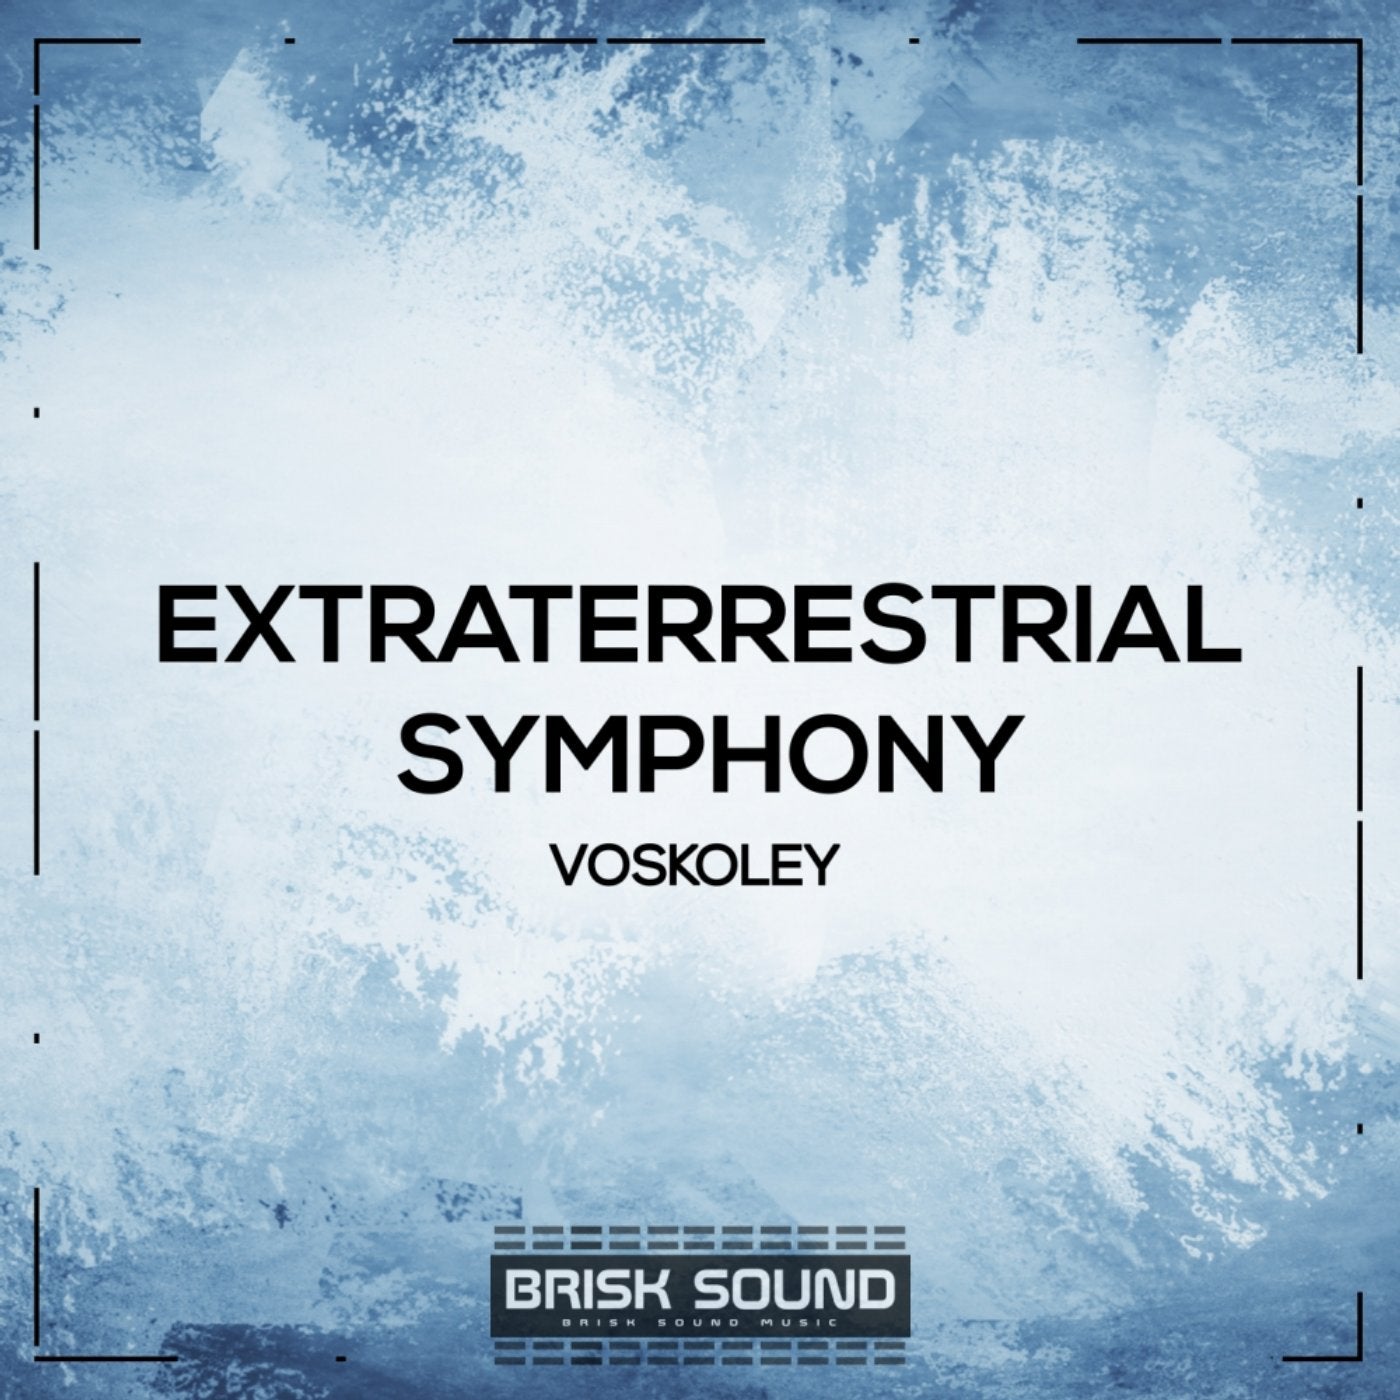 Extraterrestrial Symphony